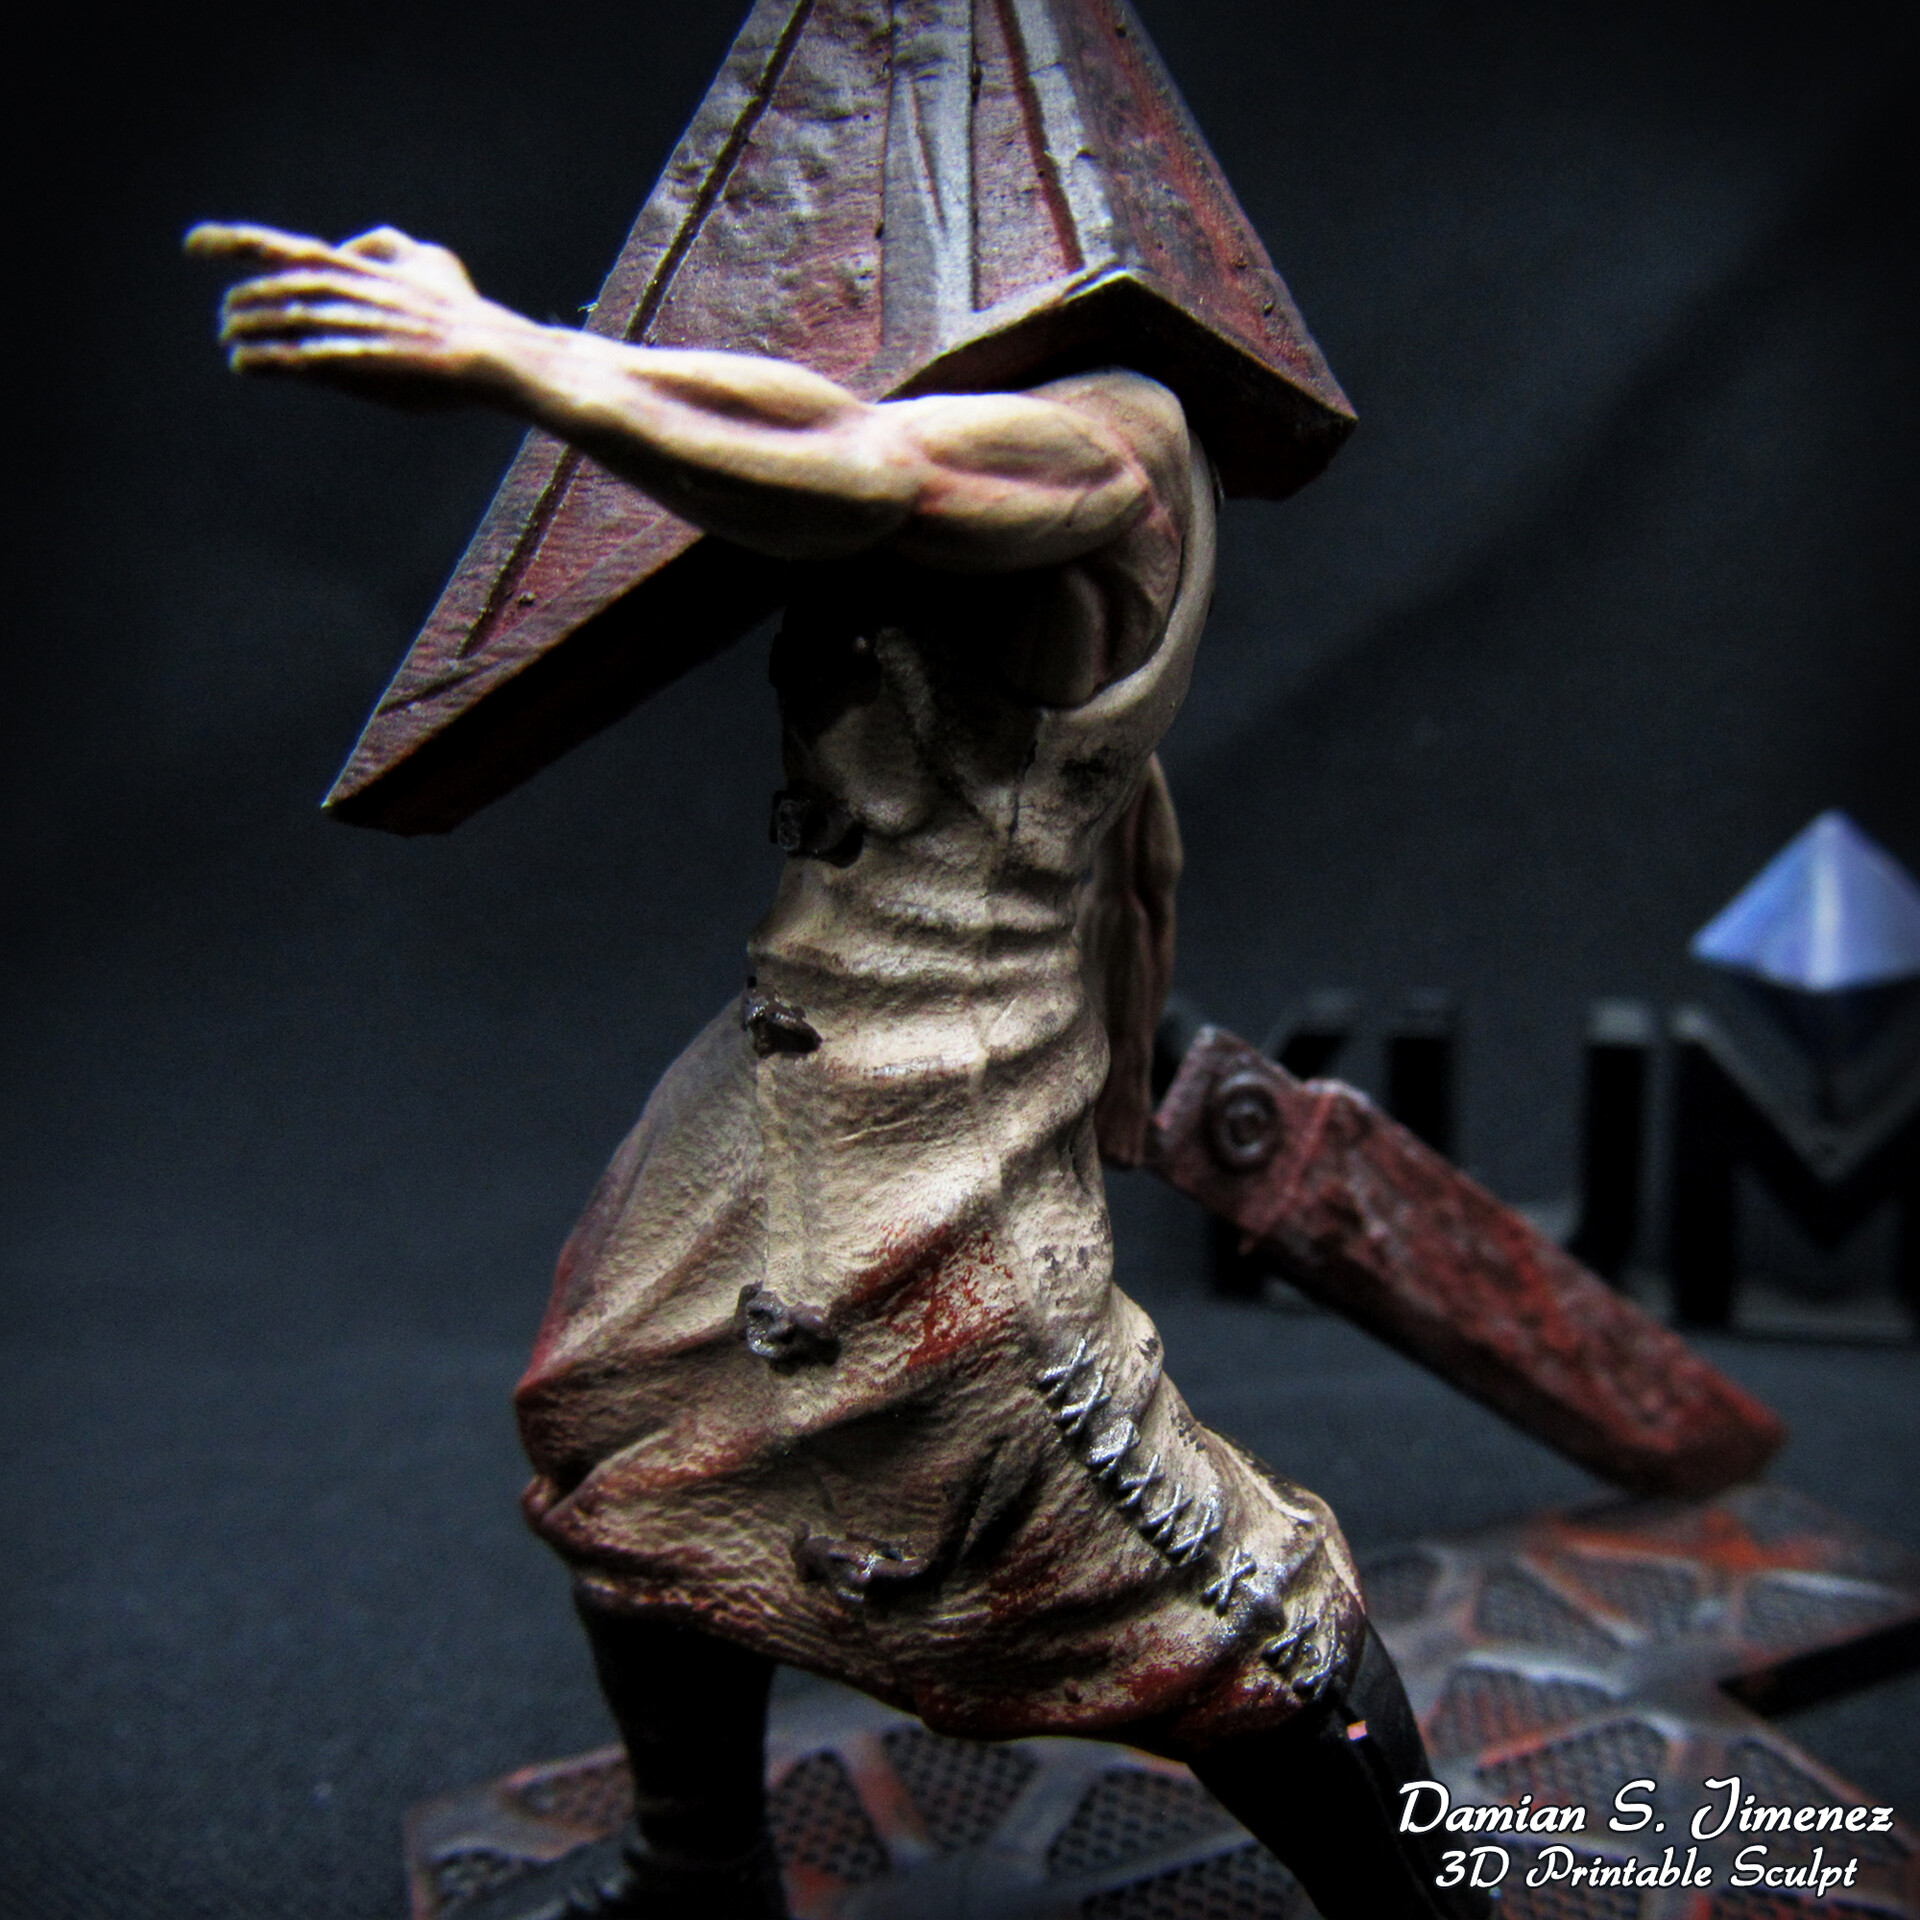 Silent Hill Diorama With Pyramid Head 